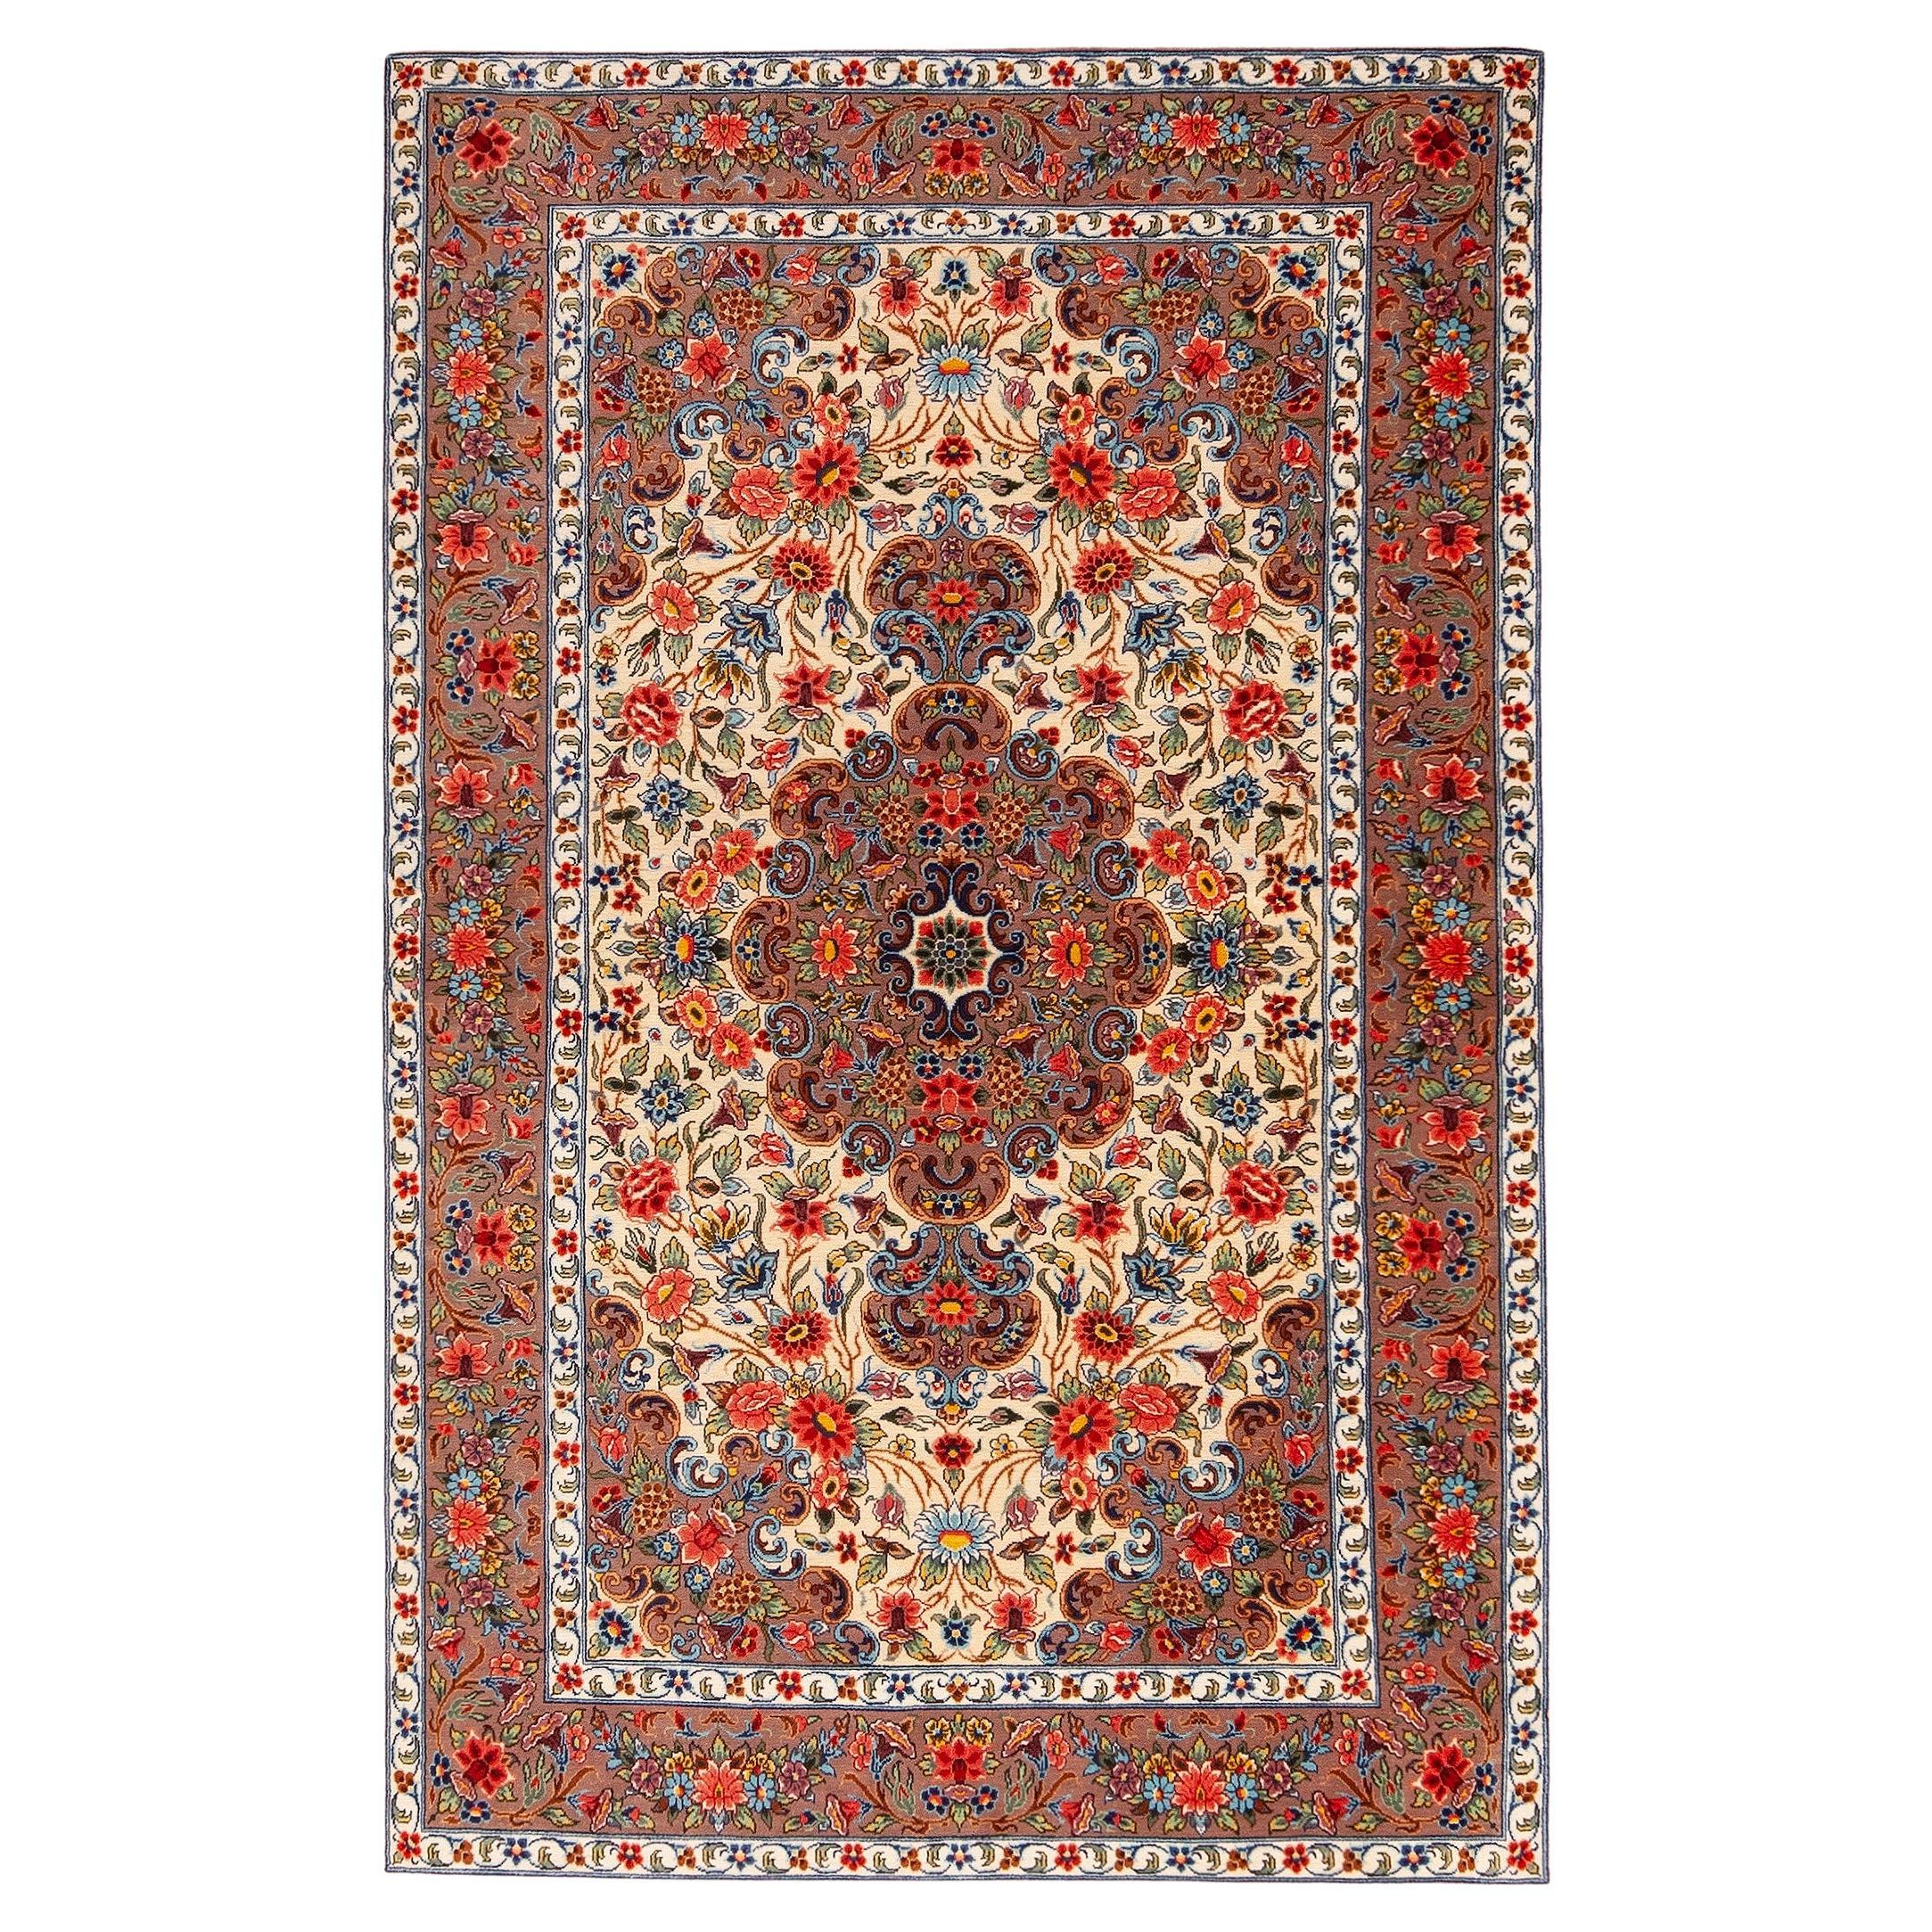 Small Fine Floral Design Vintage Luxurious Persian Silk Qum Rug 2'8" x 4'